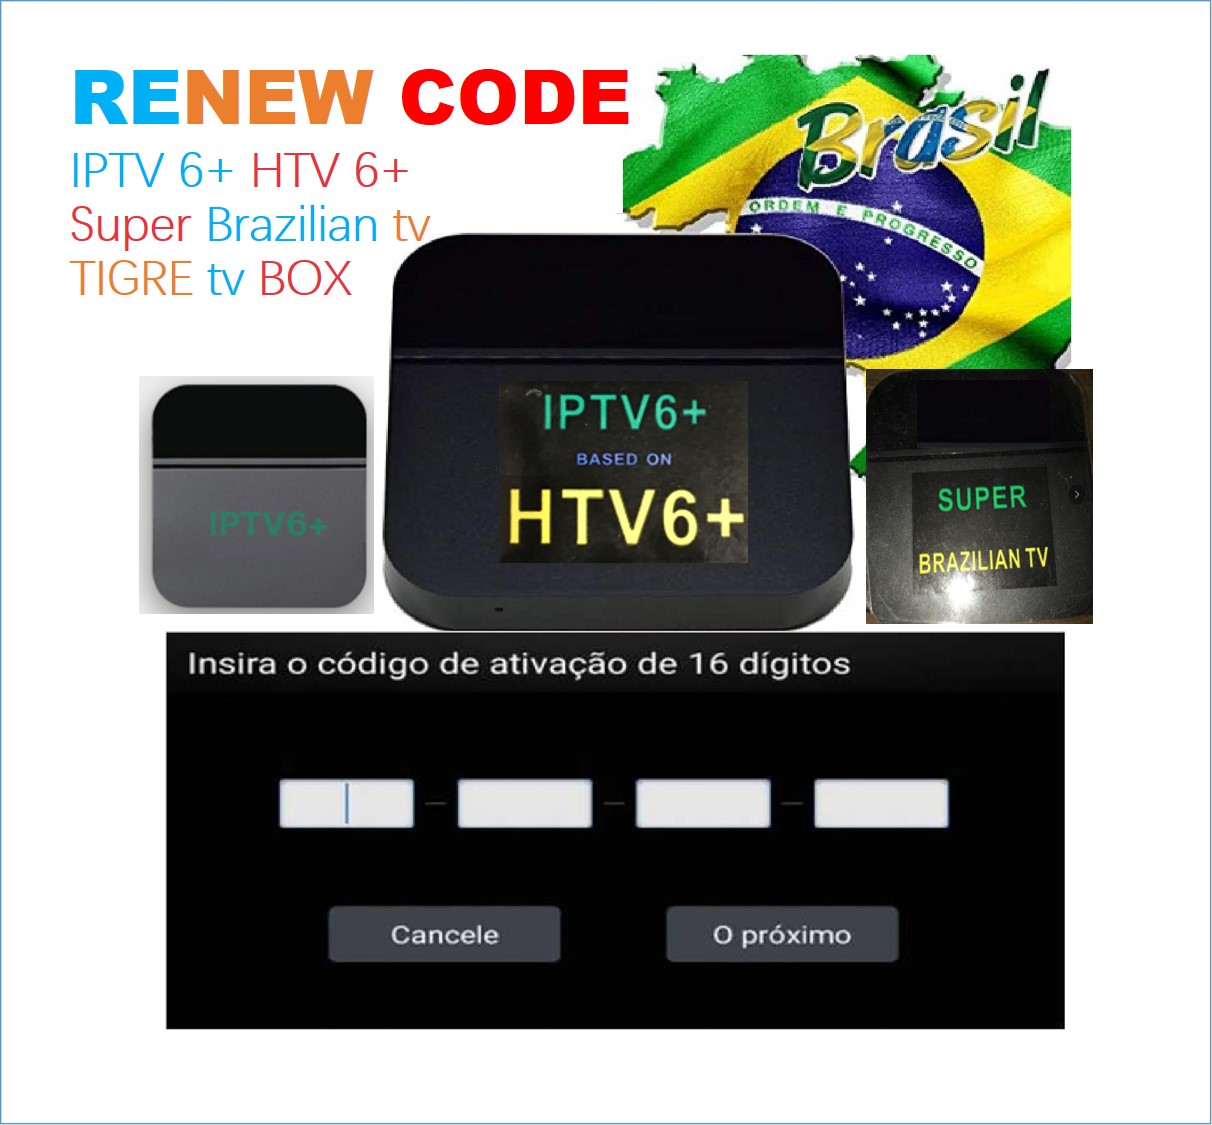 Codigo for Htv 6+ Super BRAZILIAN TV Tigre iptv 6+ renew code Activation code